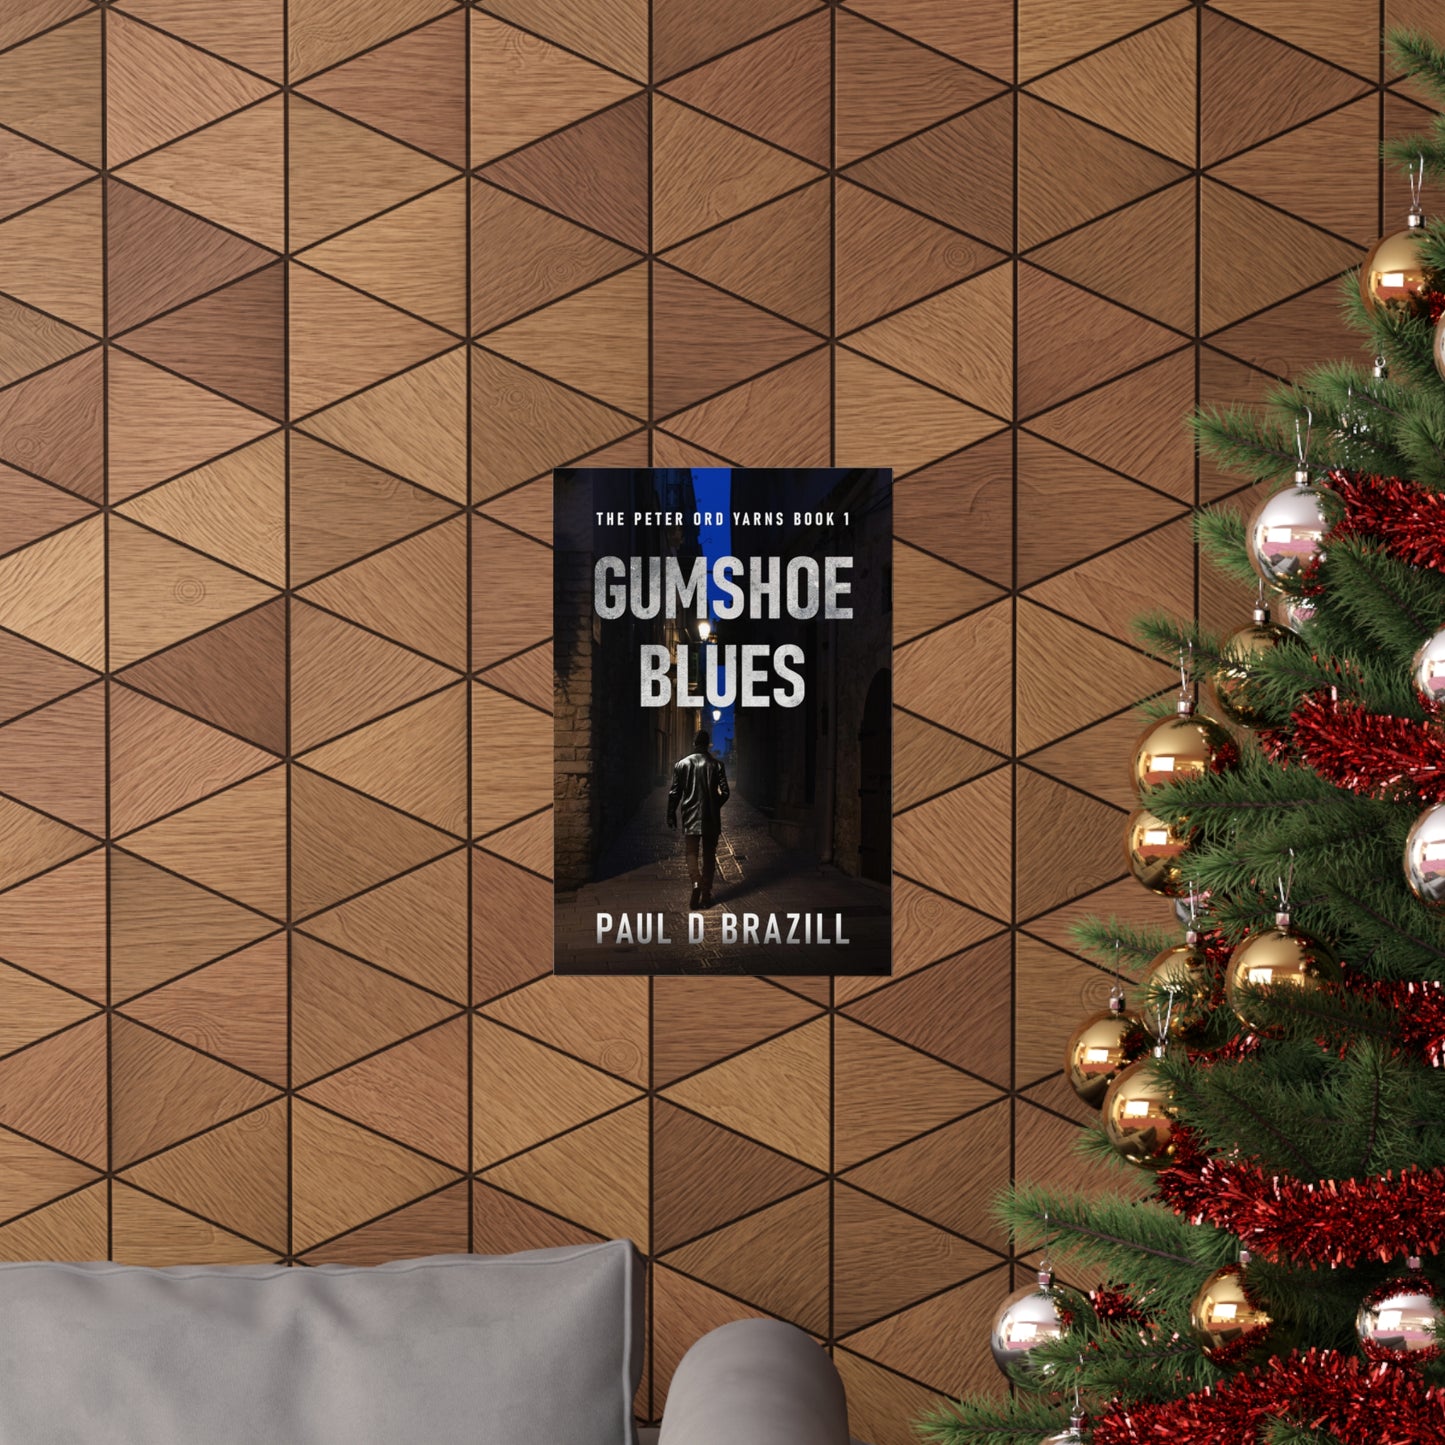 Gumshoe Blues - Matte Poster